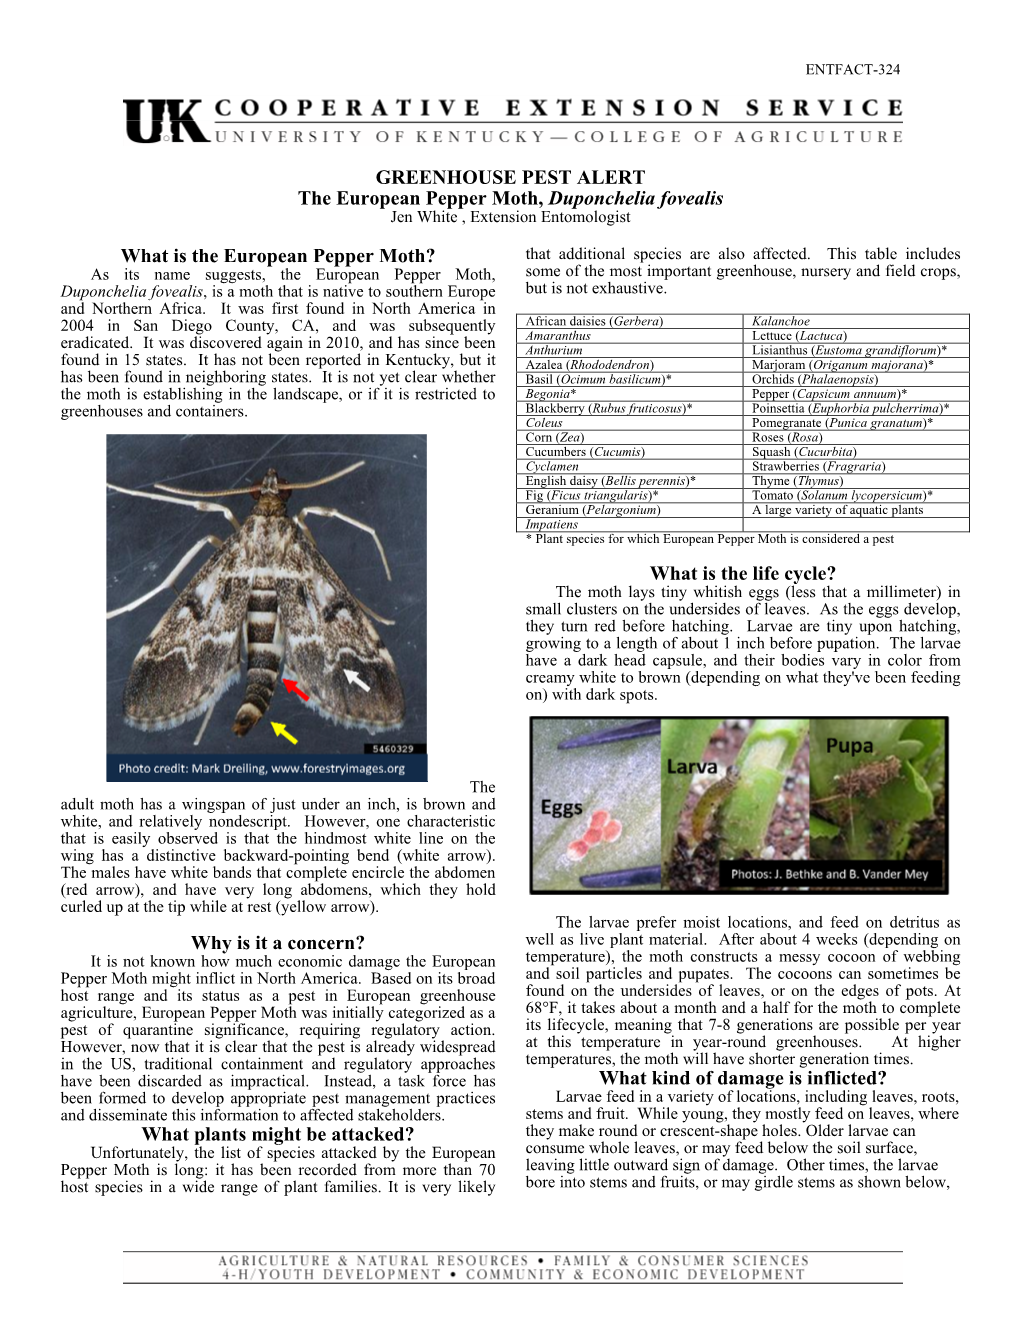 Greenhouse Pest Alert: the European Pepper Moth